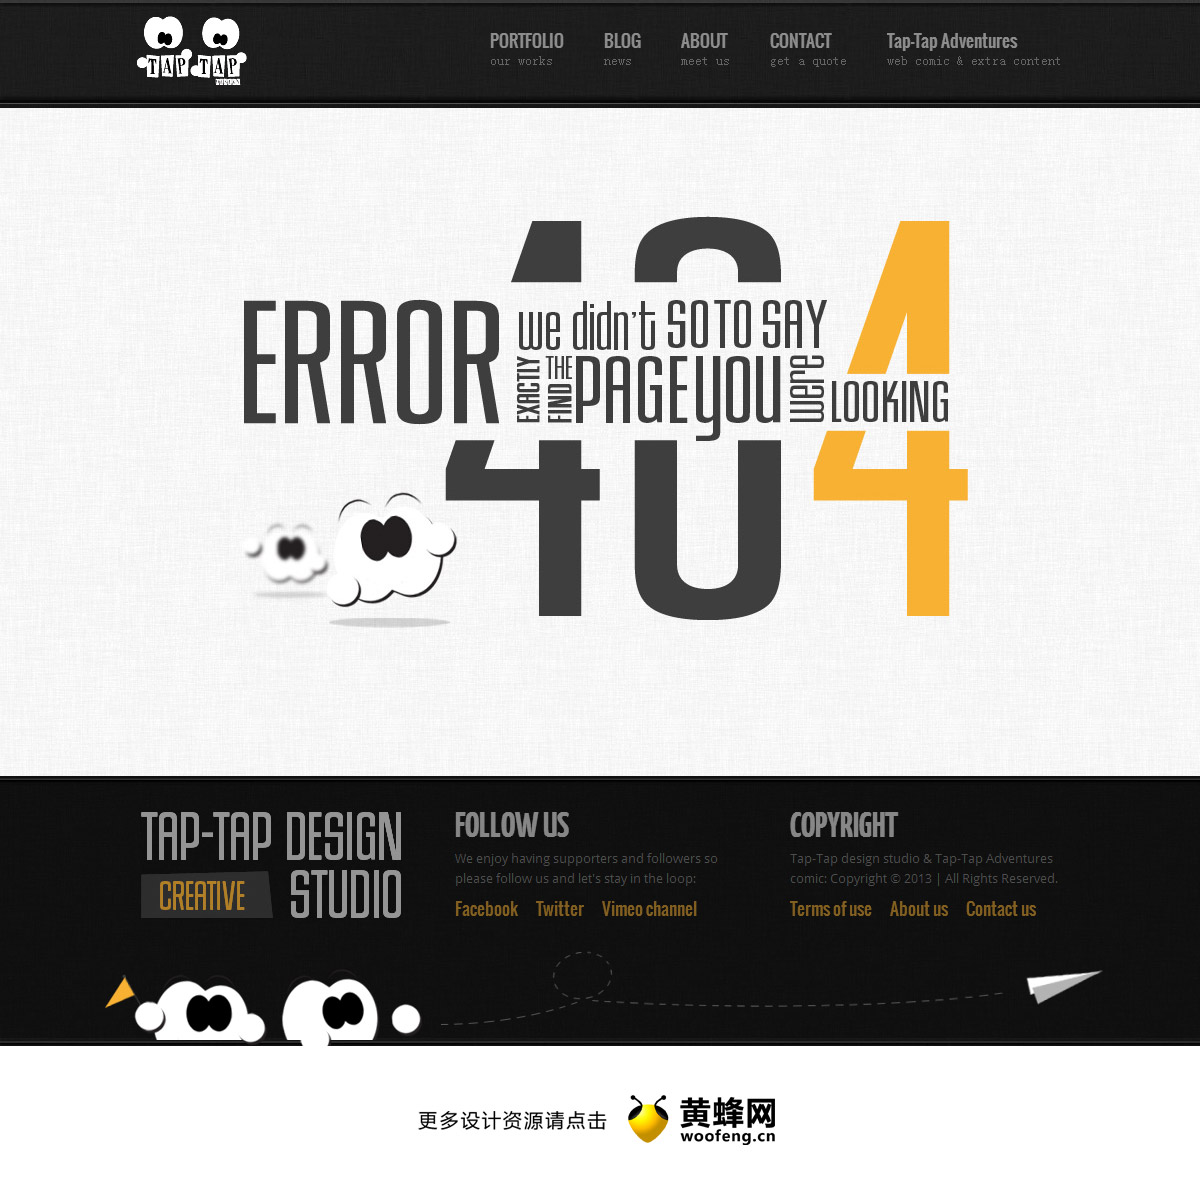 Tap-Tap design 404创意页面设计，来源自黄蜂网https://woofeng.cn/webcut/